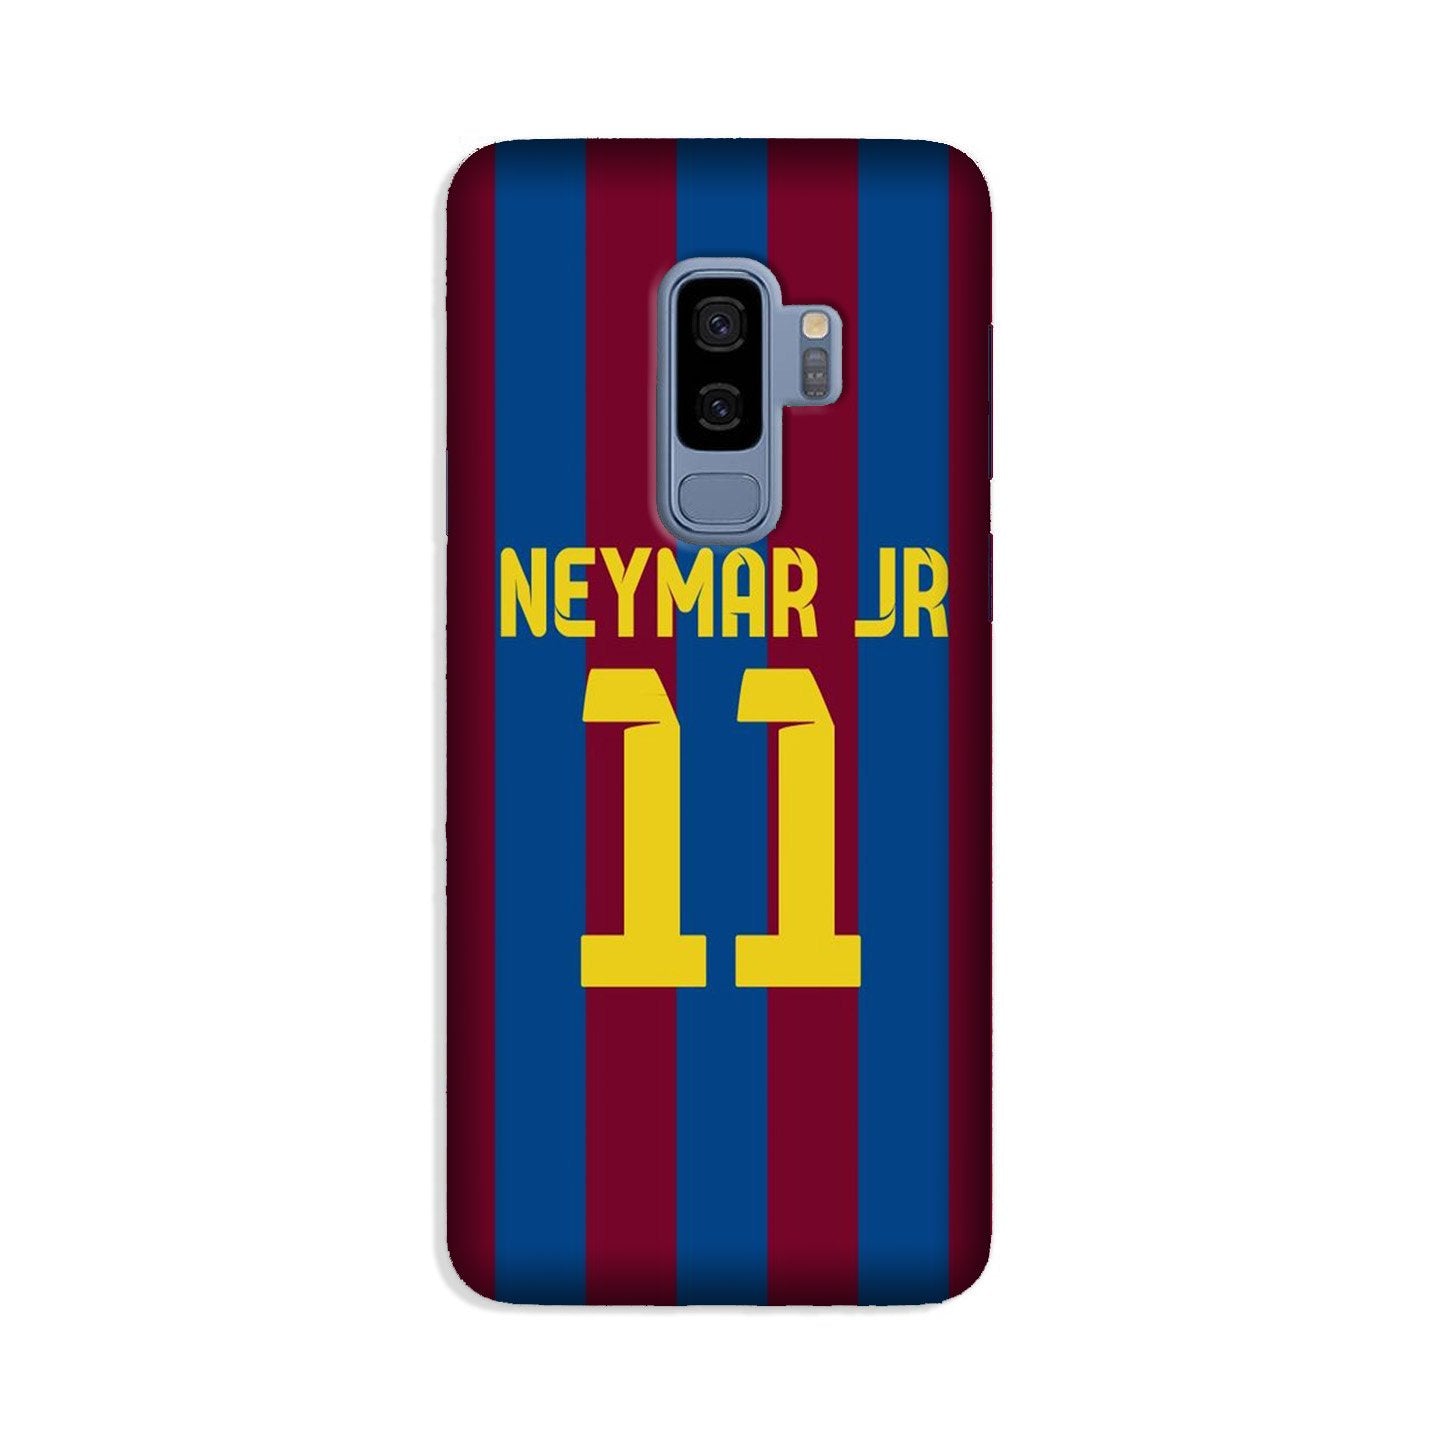 Neymar Jr Case for Galaxy S9 Plus  (Design - 162)